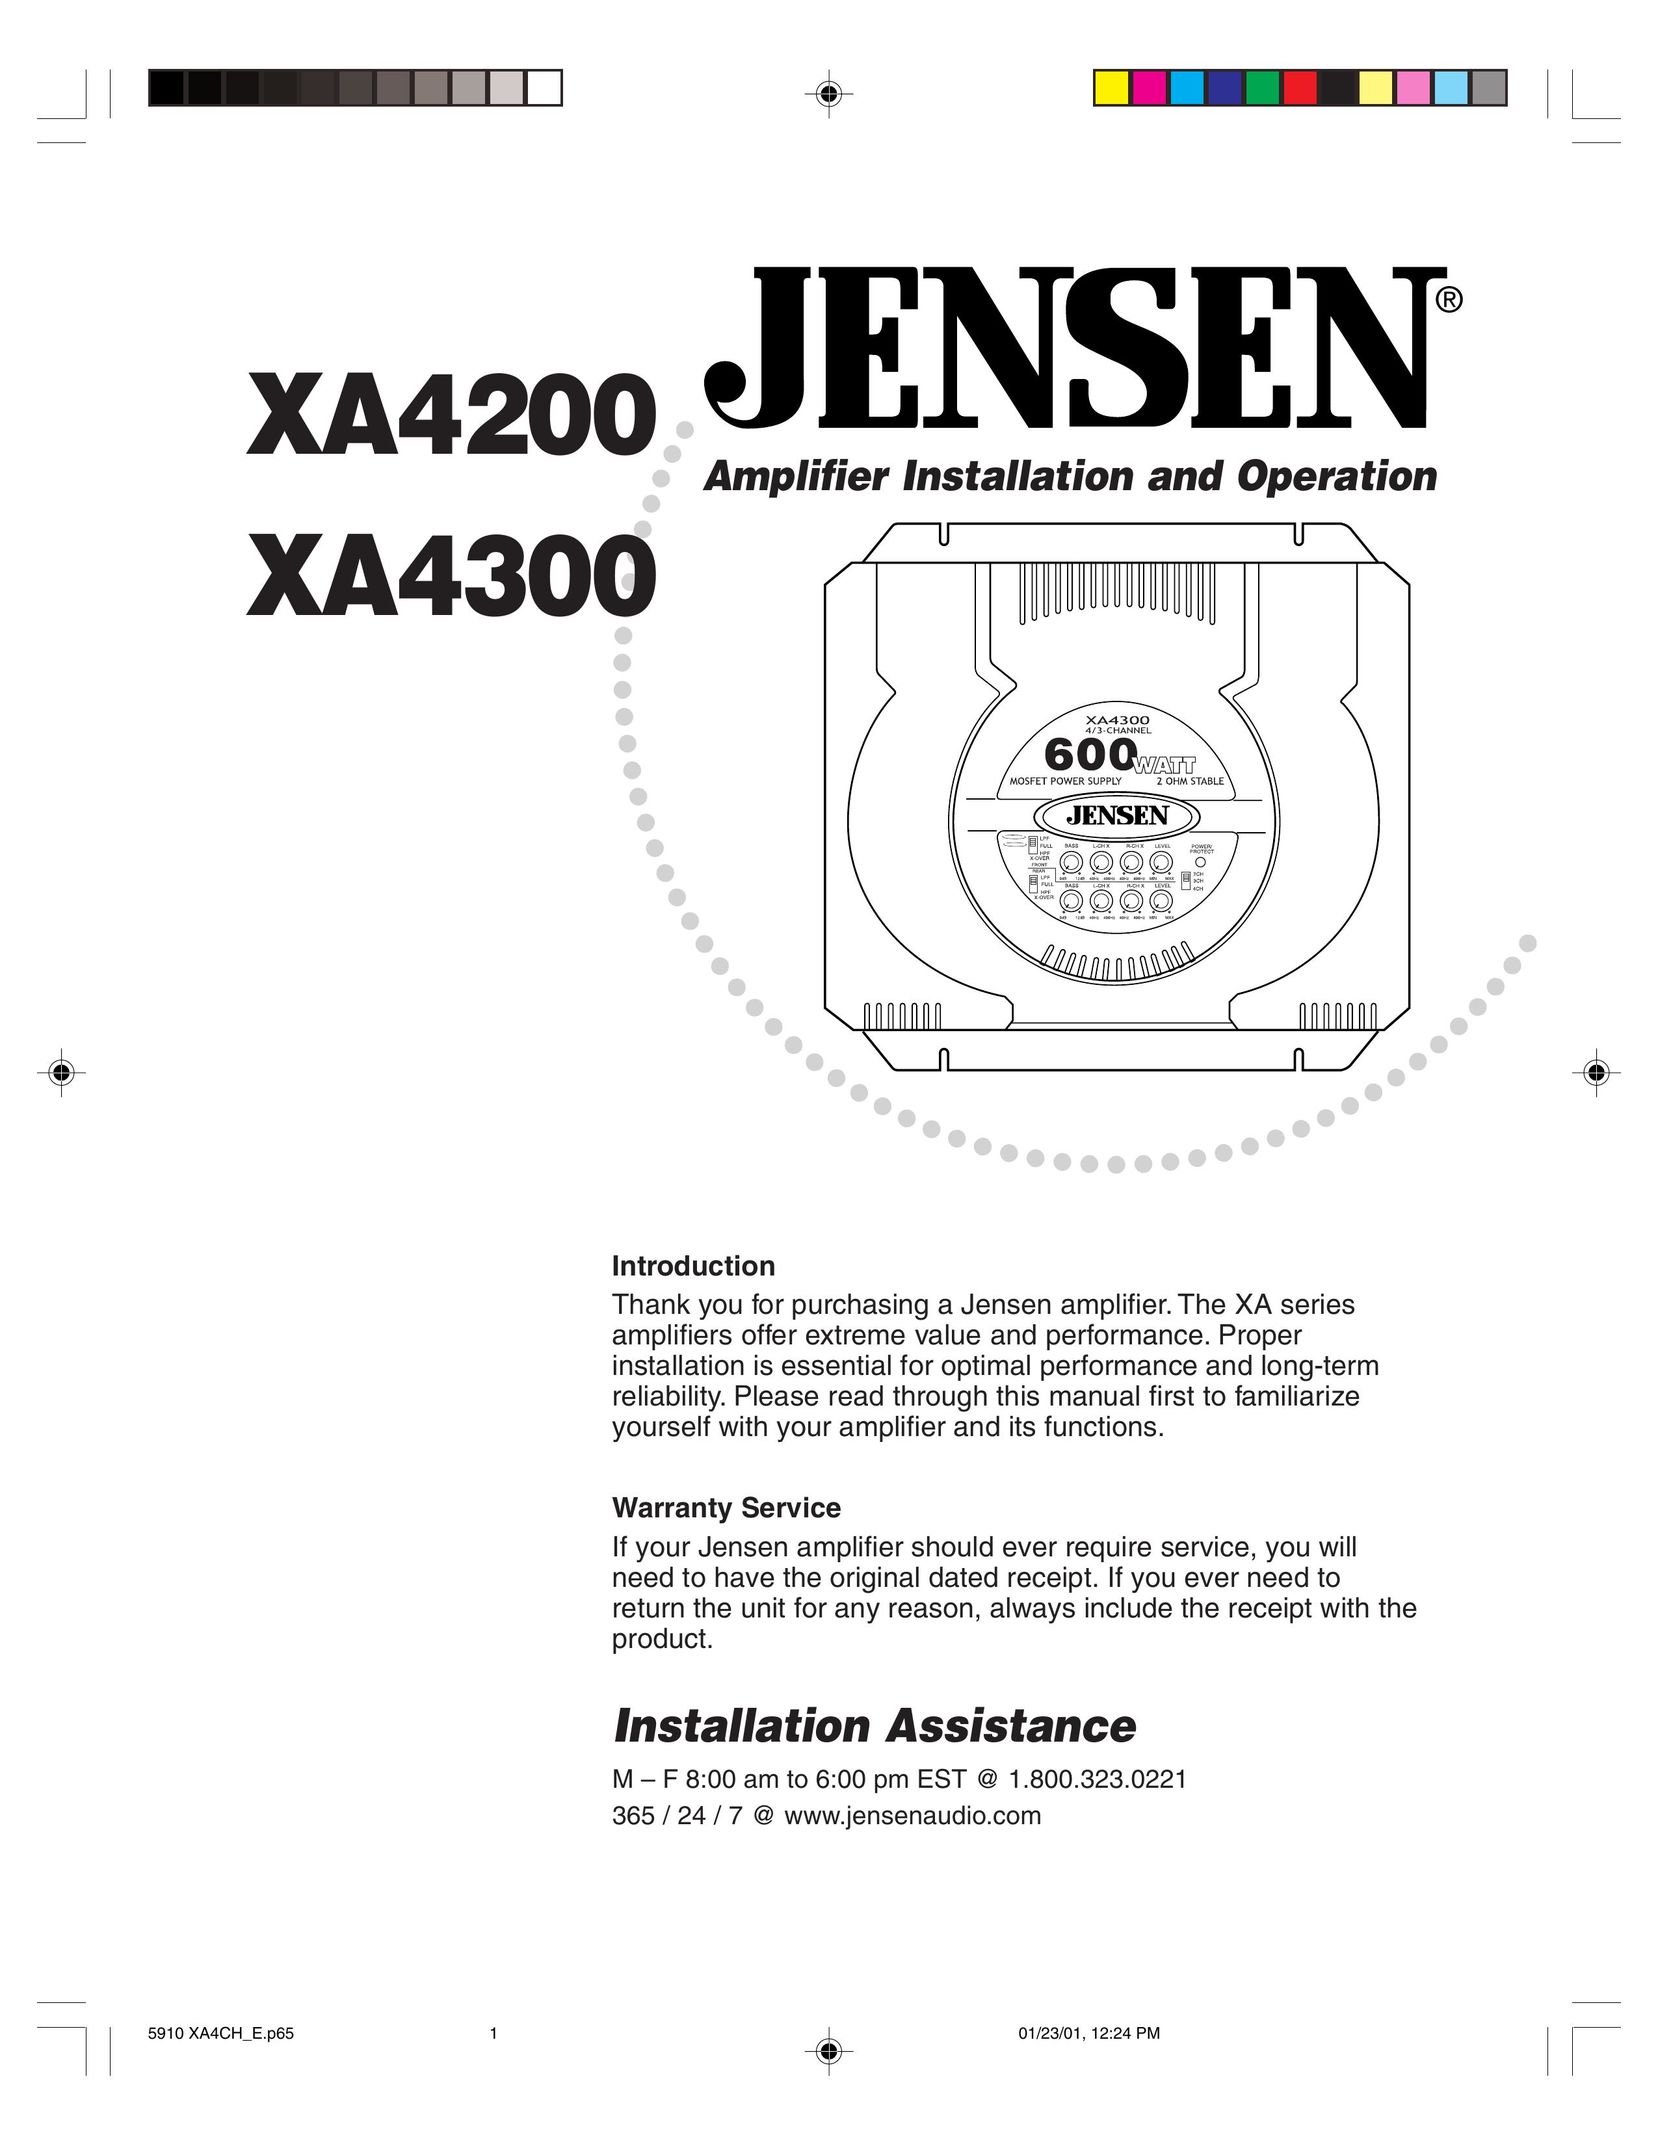 Jensen XA4300 Car Amplifier User Manual